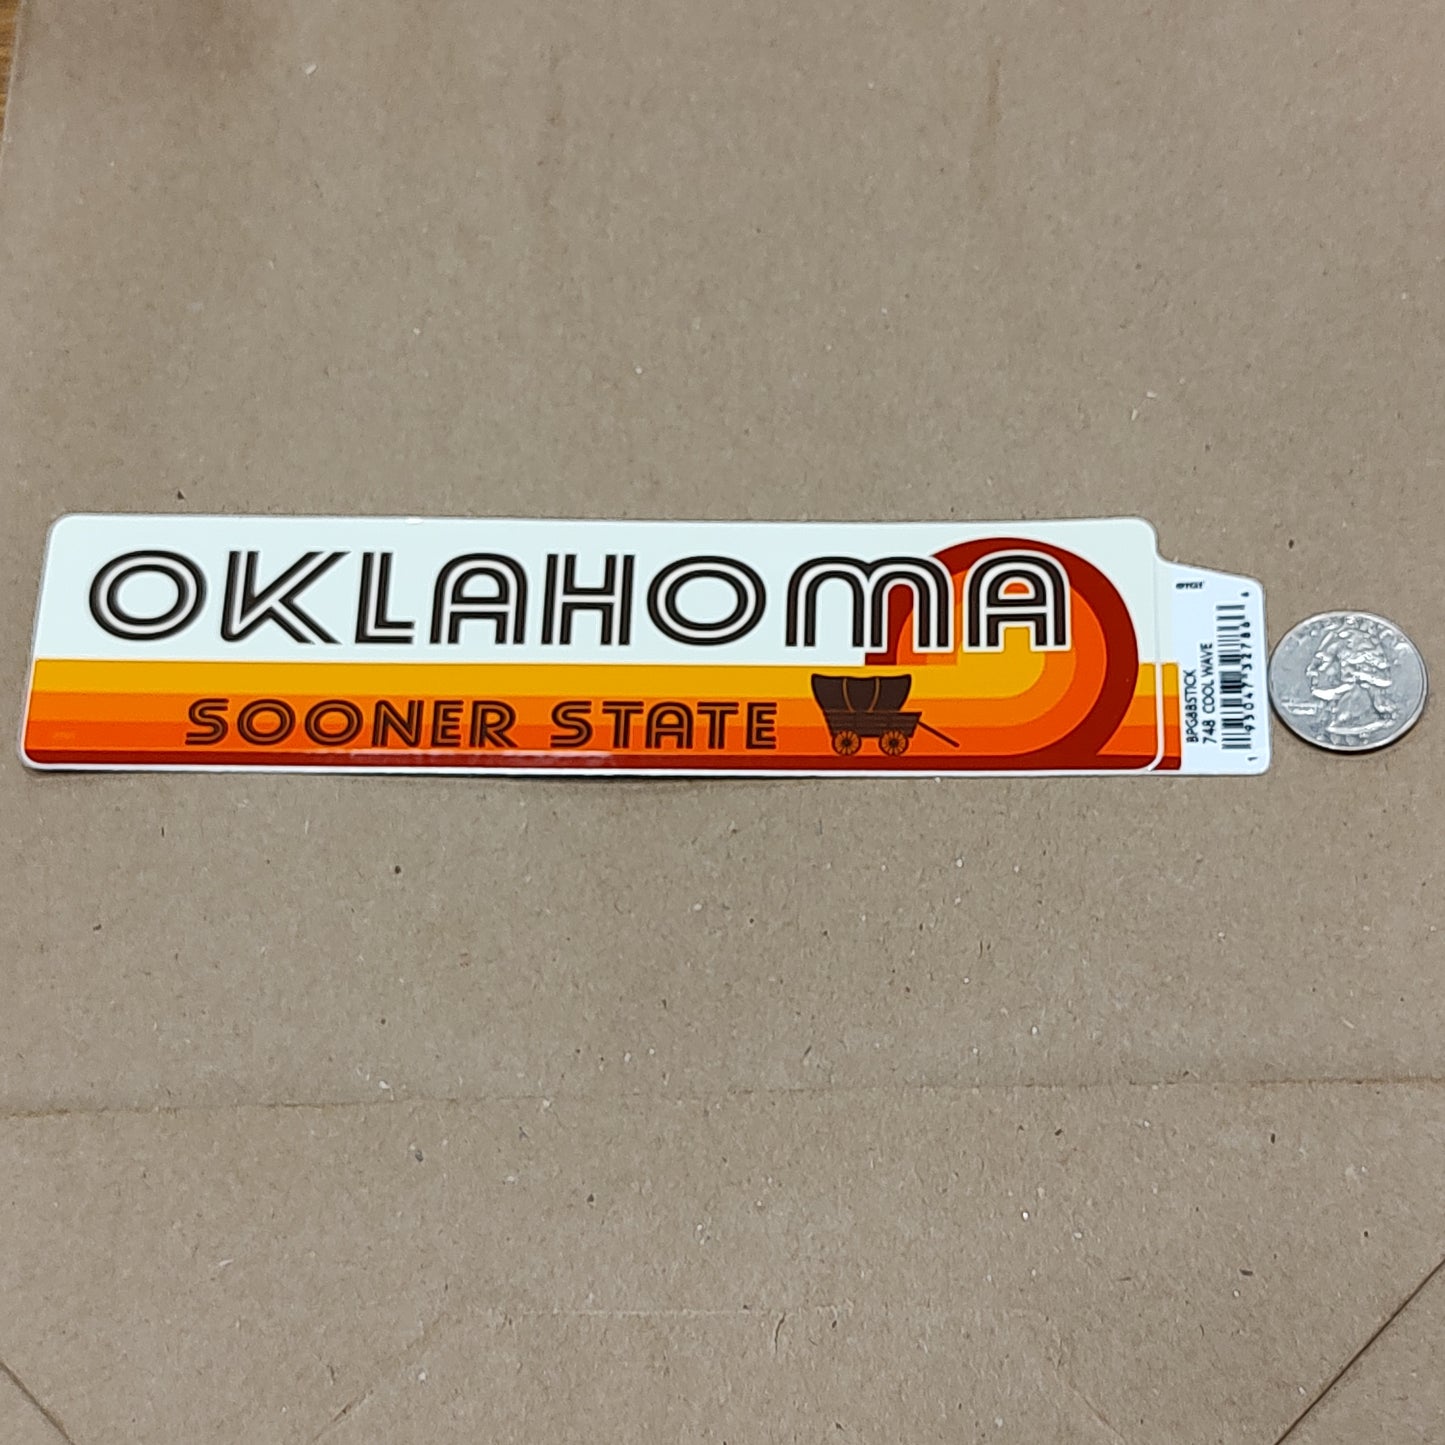 Oklahoma Sooner State - sticker